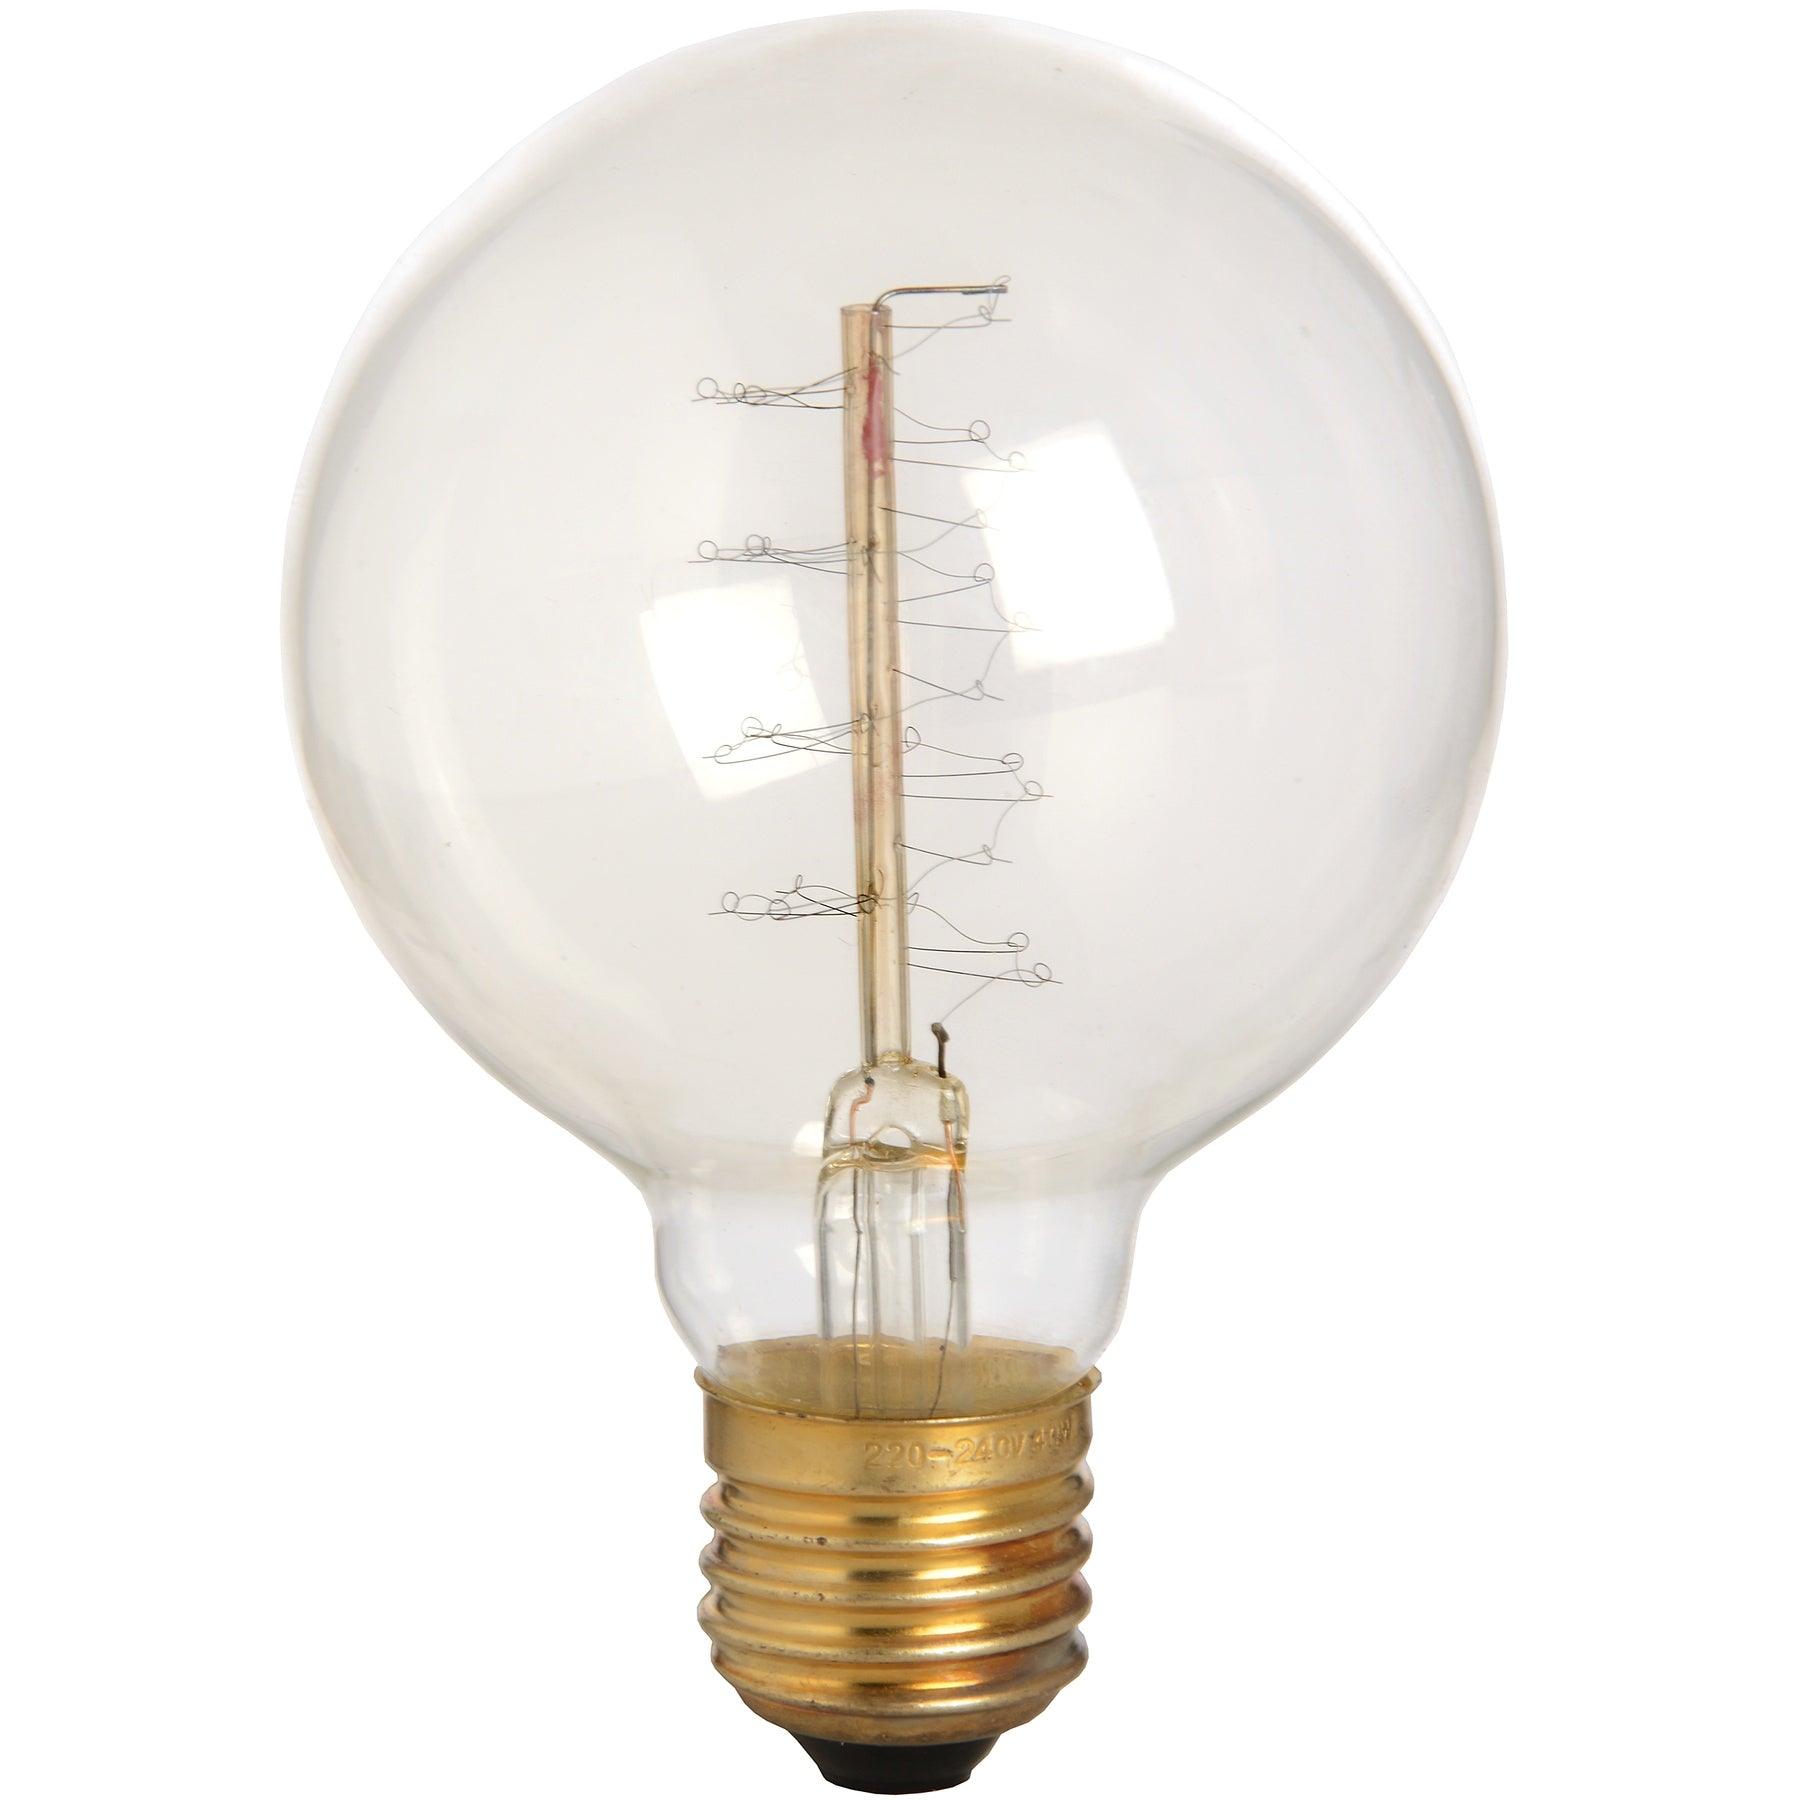 View Edison Filament Round Globe Bulb information